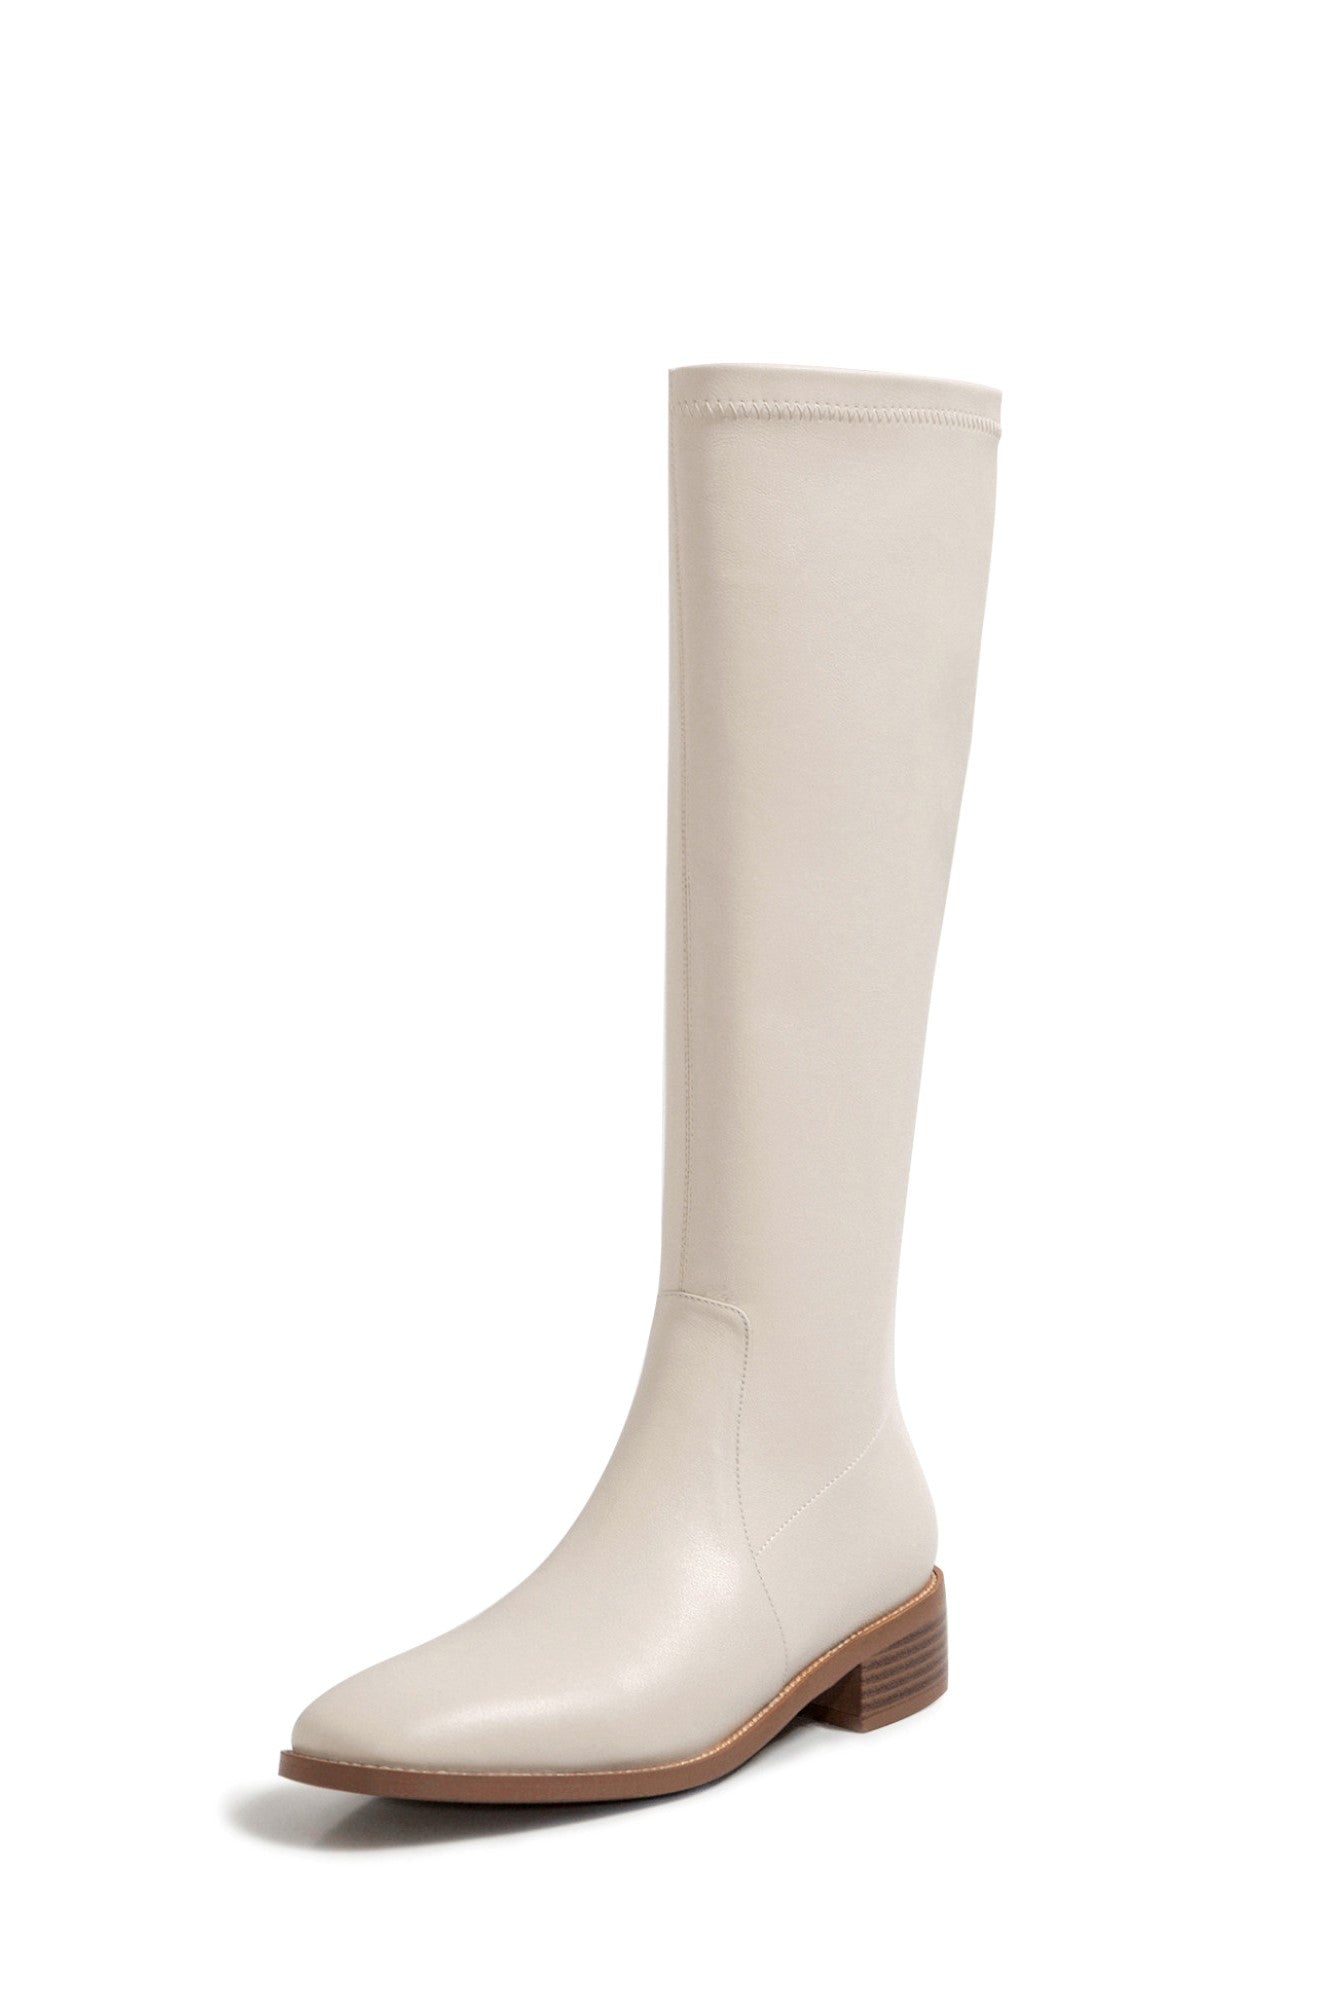 ROLISA-Rica-Low-Heel-Knee-High-White-Boots-3-2